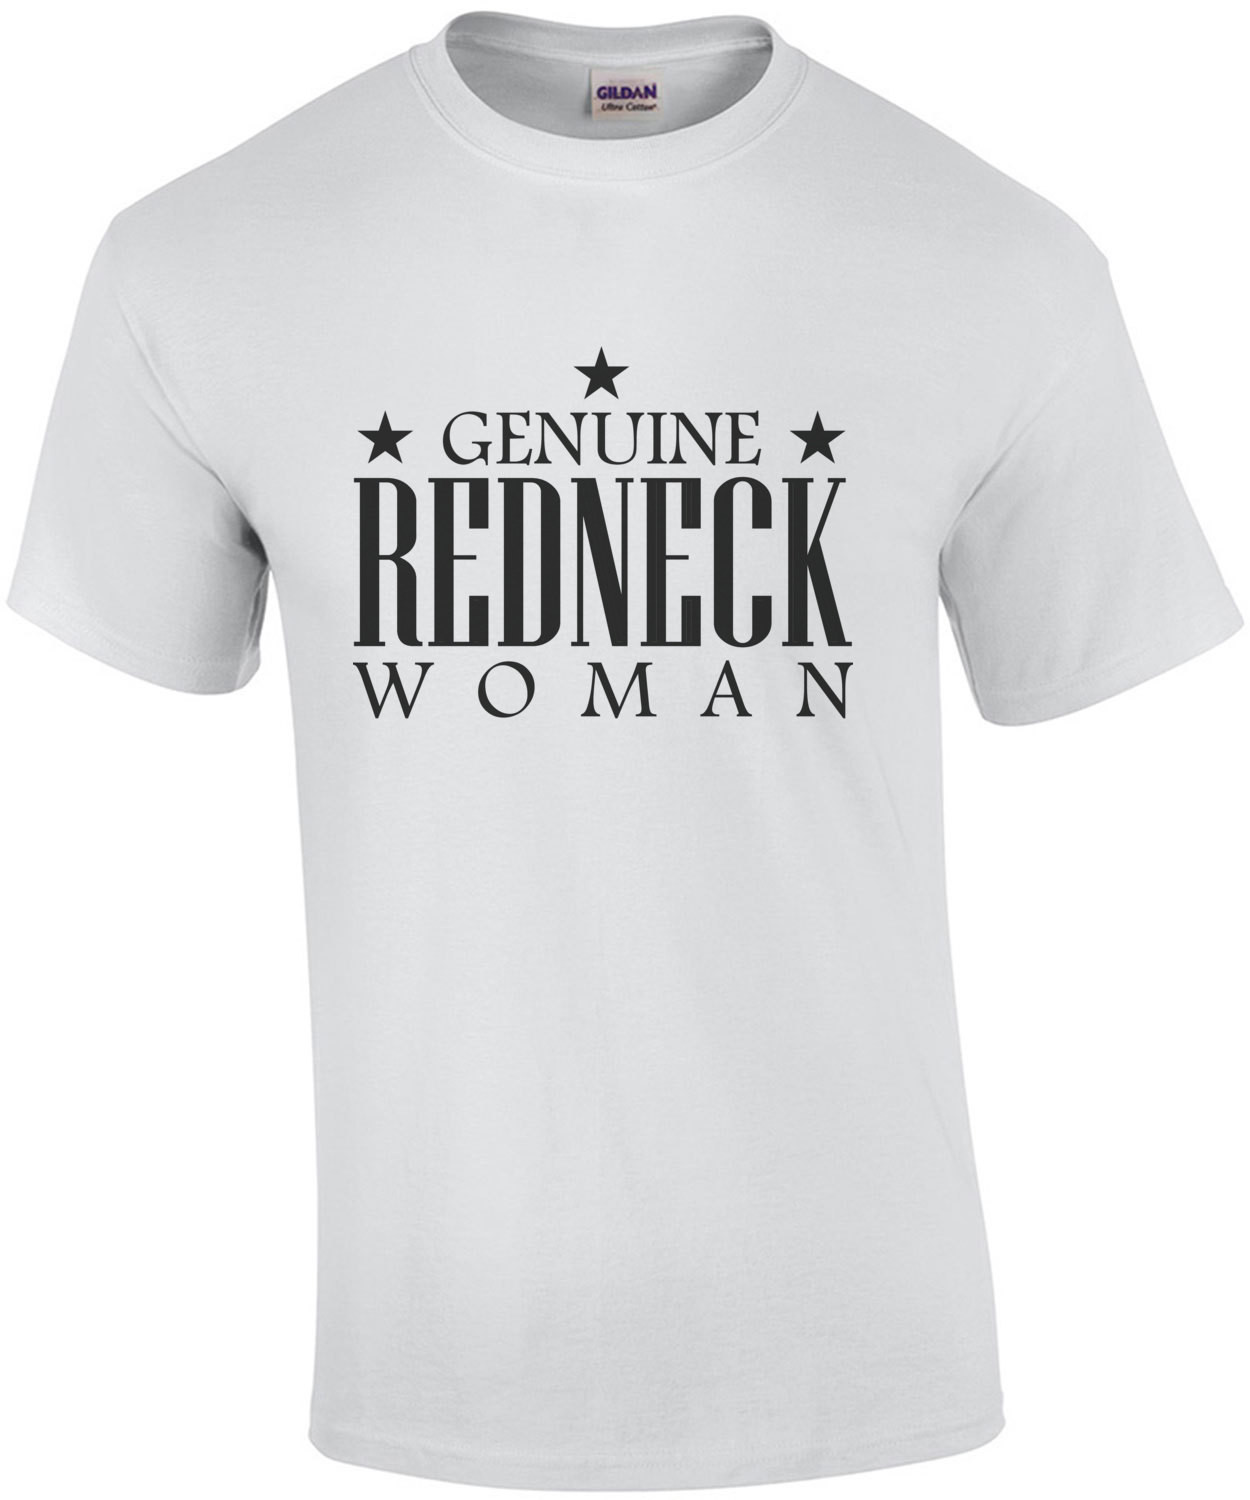 Genuine Redneck Woman - funny ladies shirt